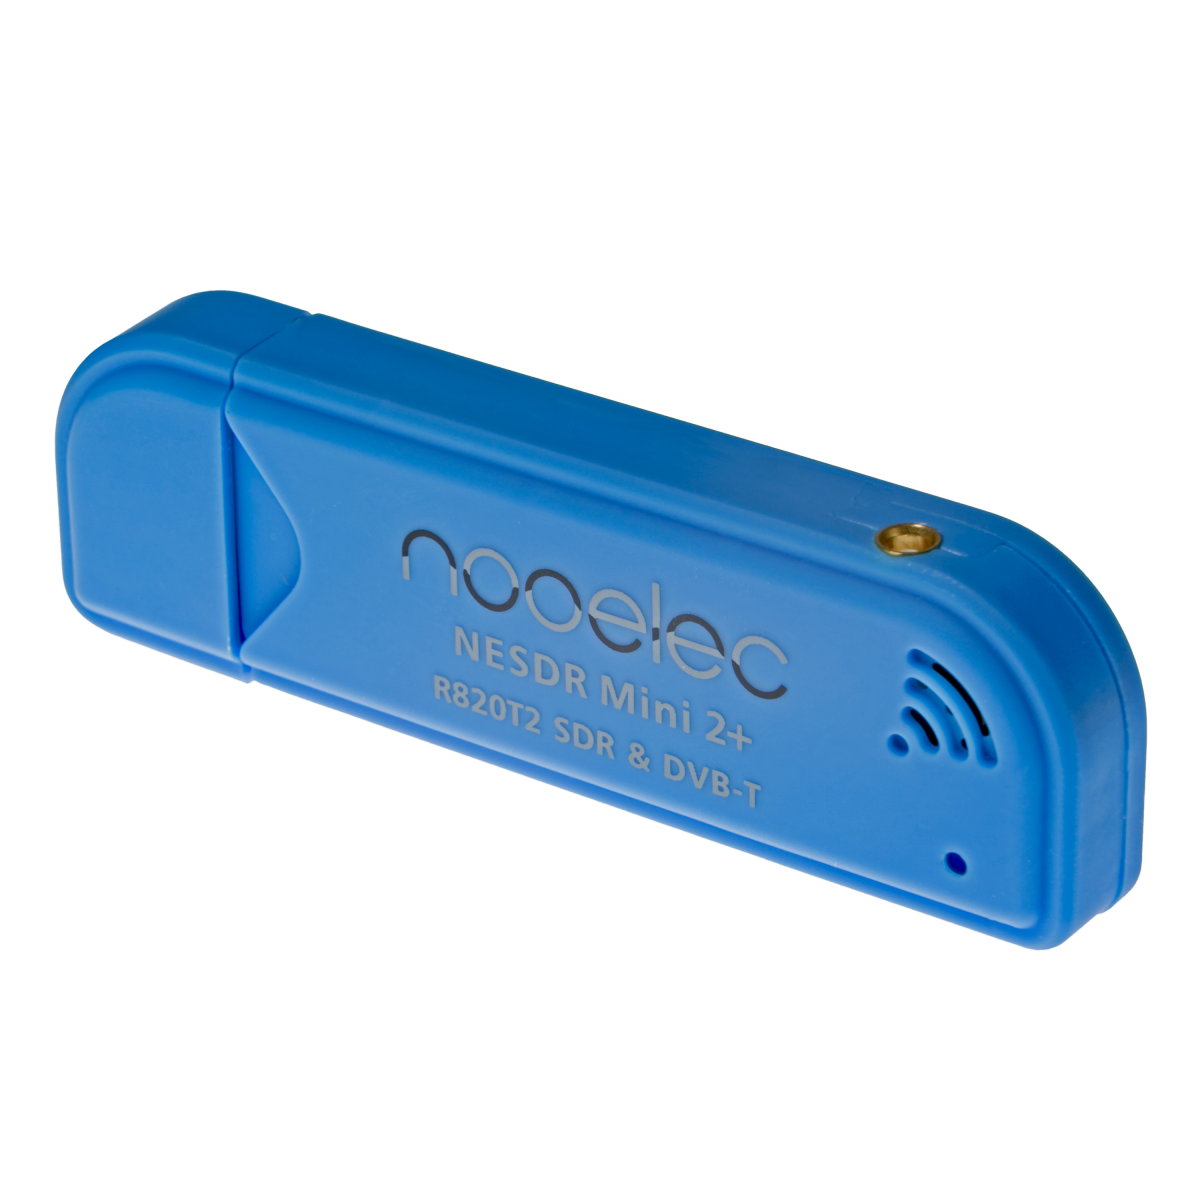 Nooelec NESDR Mini 2+ 0.5PPM TCXO USB RTL-SDR Receiver (RTL2832 + R820T2)  w/ Antenna